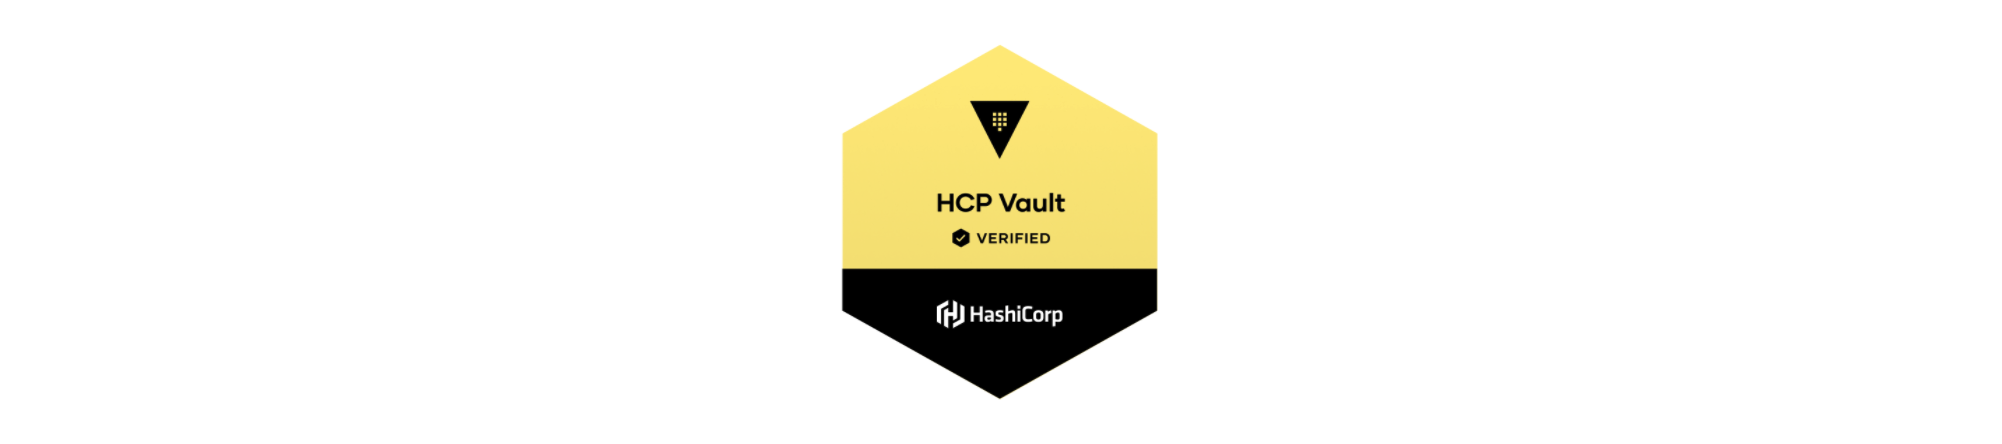 HCP Vault verified badge.